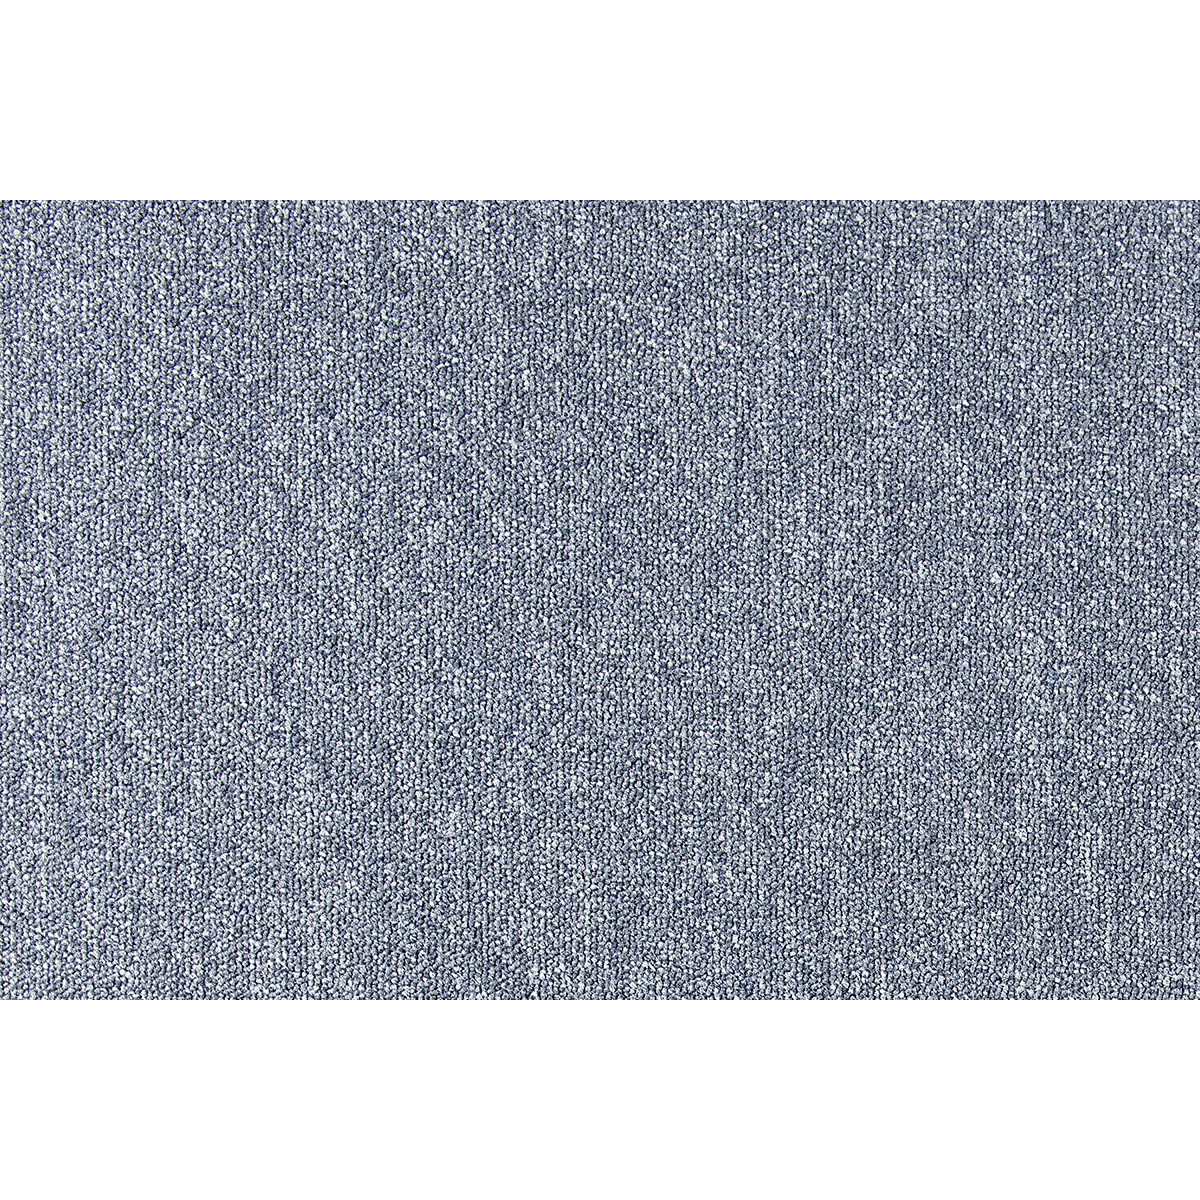 Metrážový koberec Cobalt SDN 64061 - AB světle modrý, zátěžový